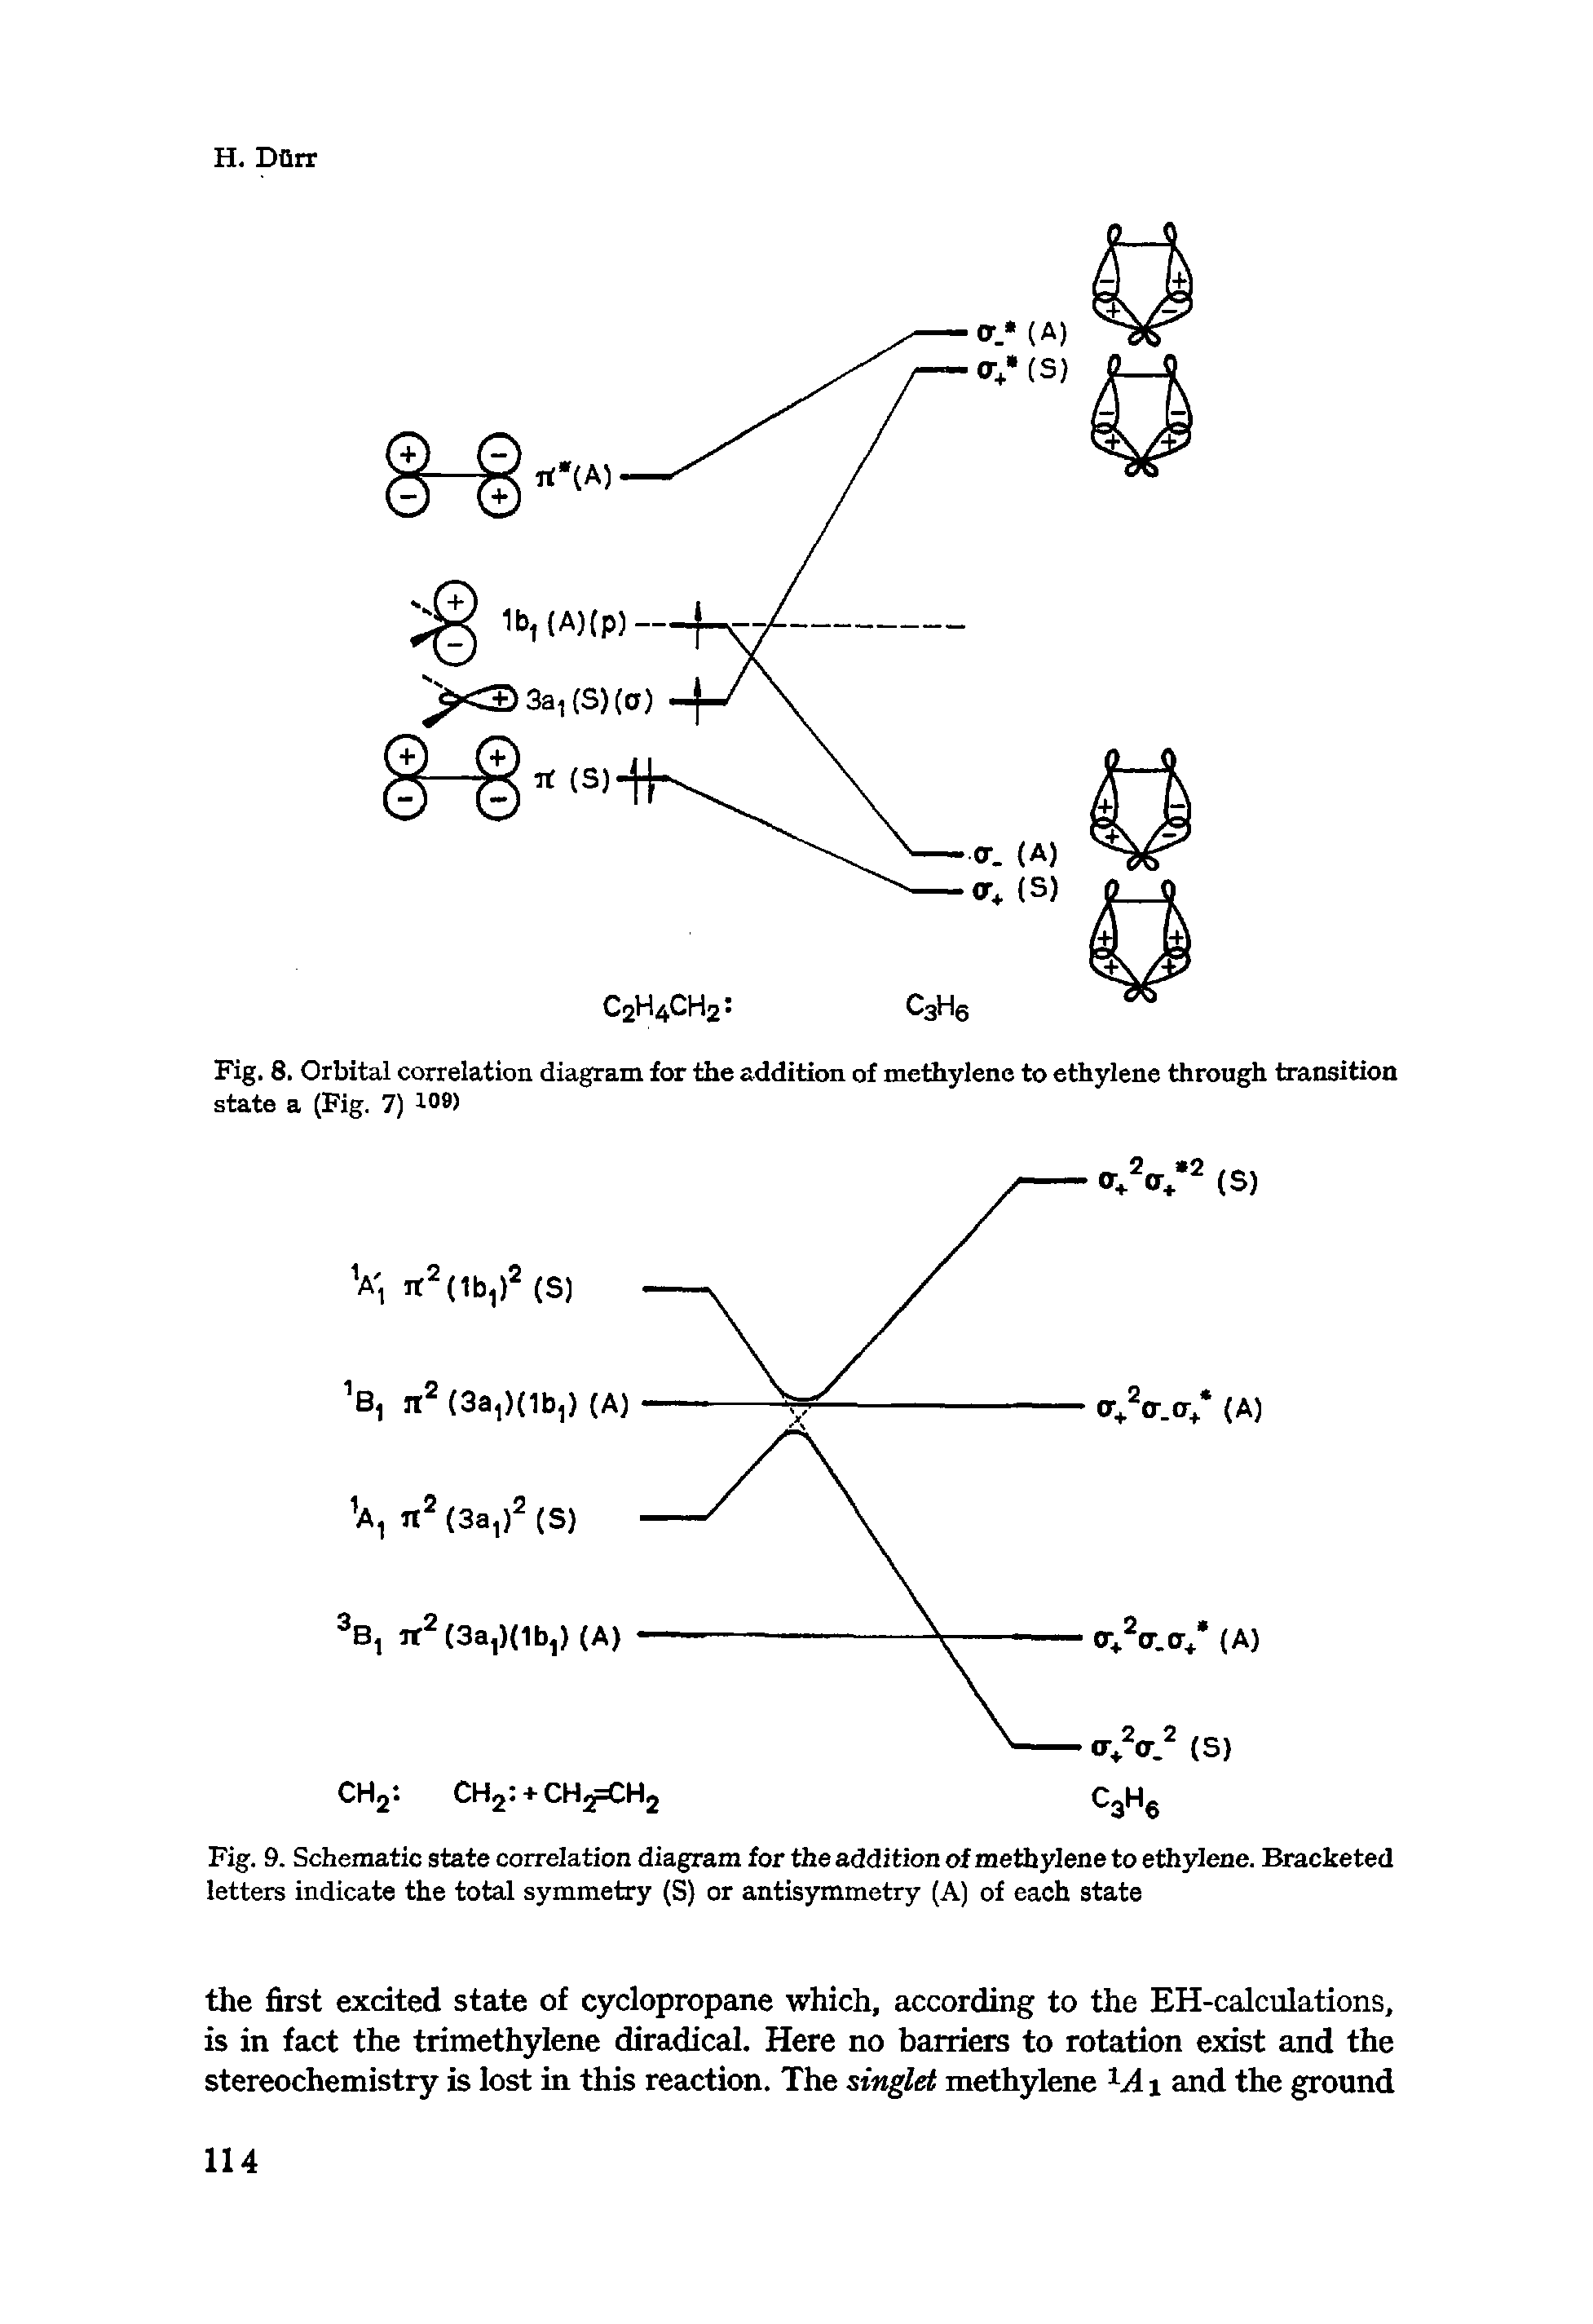 Fig. 8. Orbital correlation diagram for the addition of methylene to ethylene through transition state a (Pig. 7) 109)...